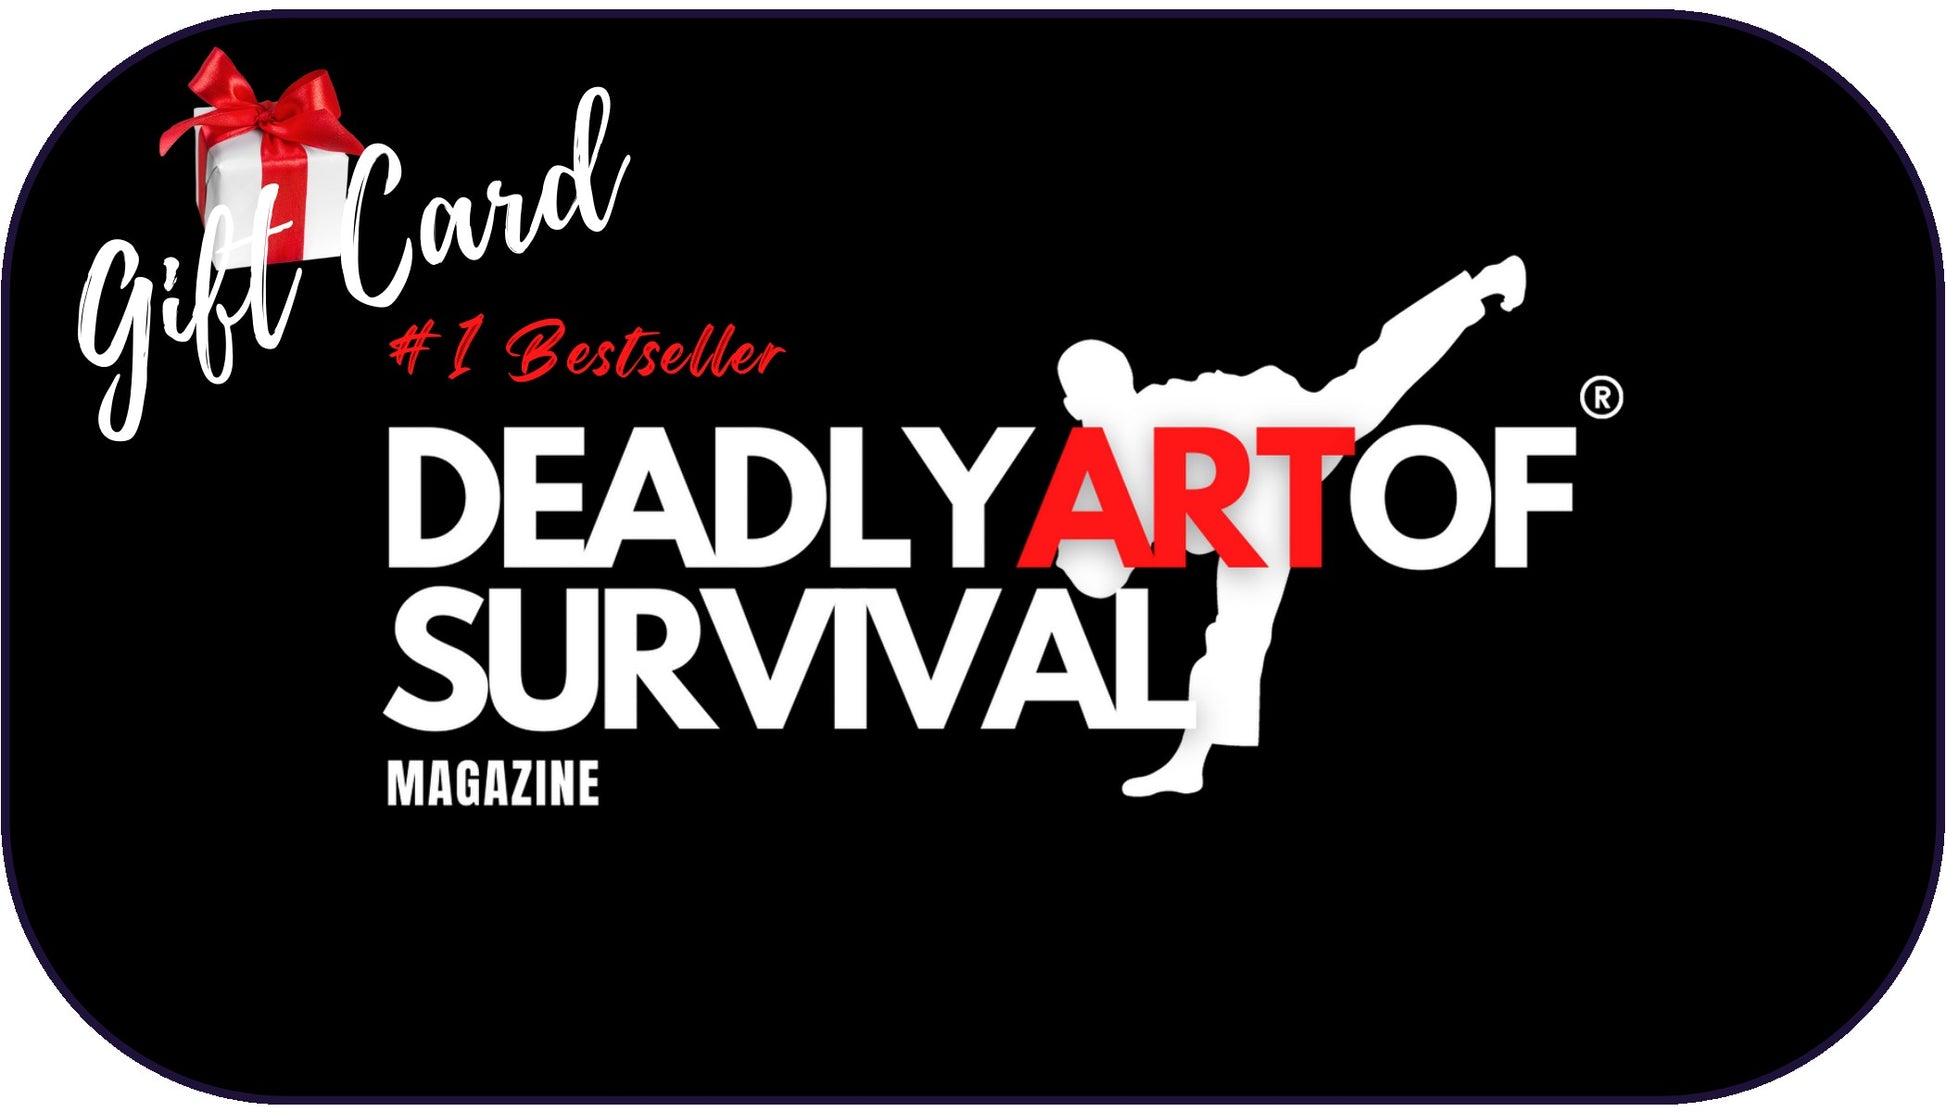 Gift Card From The Deadly Art of Survival Magazine deadlyartofsurvival.com